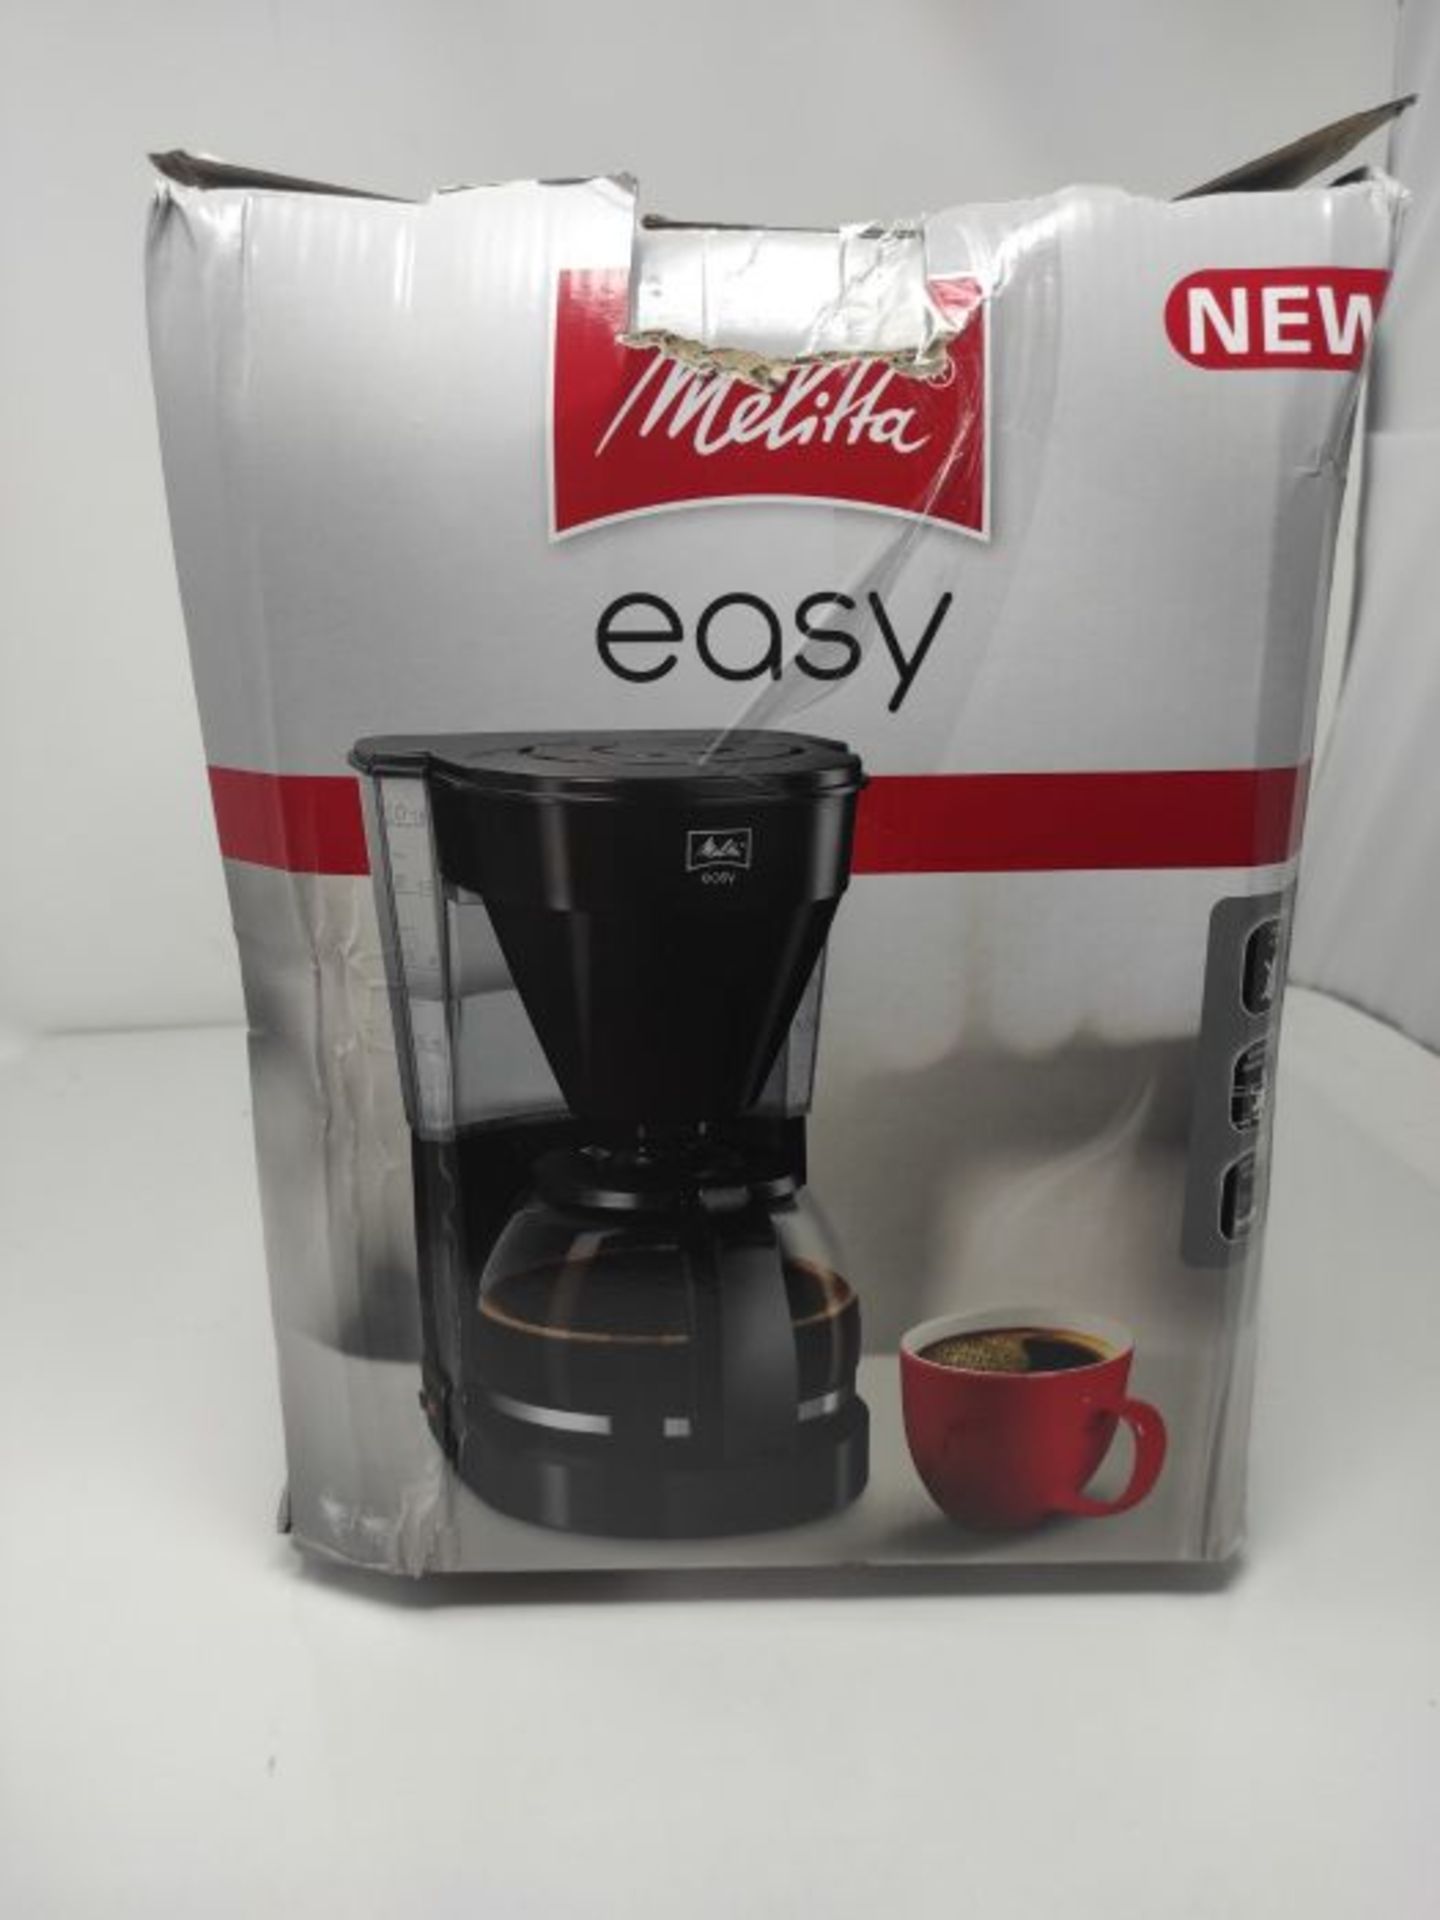 Melitta Filter Coffee Machine with Glass Jug, Easy II Model, 1023-02, Black, 6762887 - Image 2 of 3